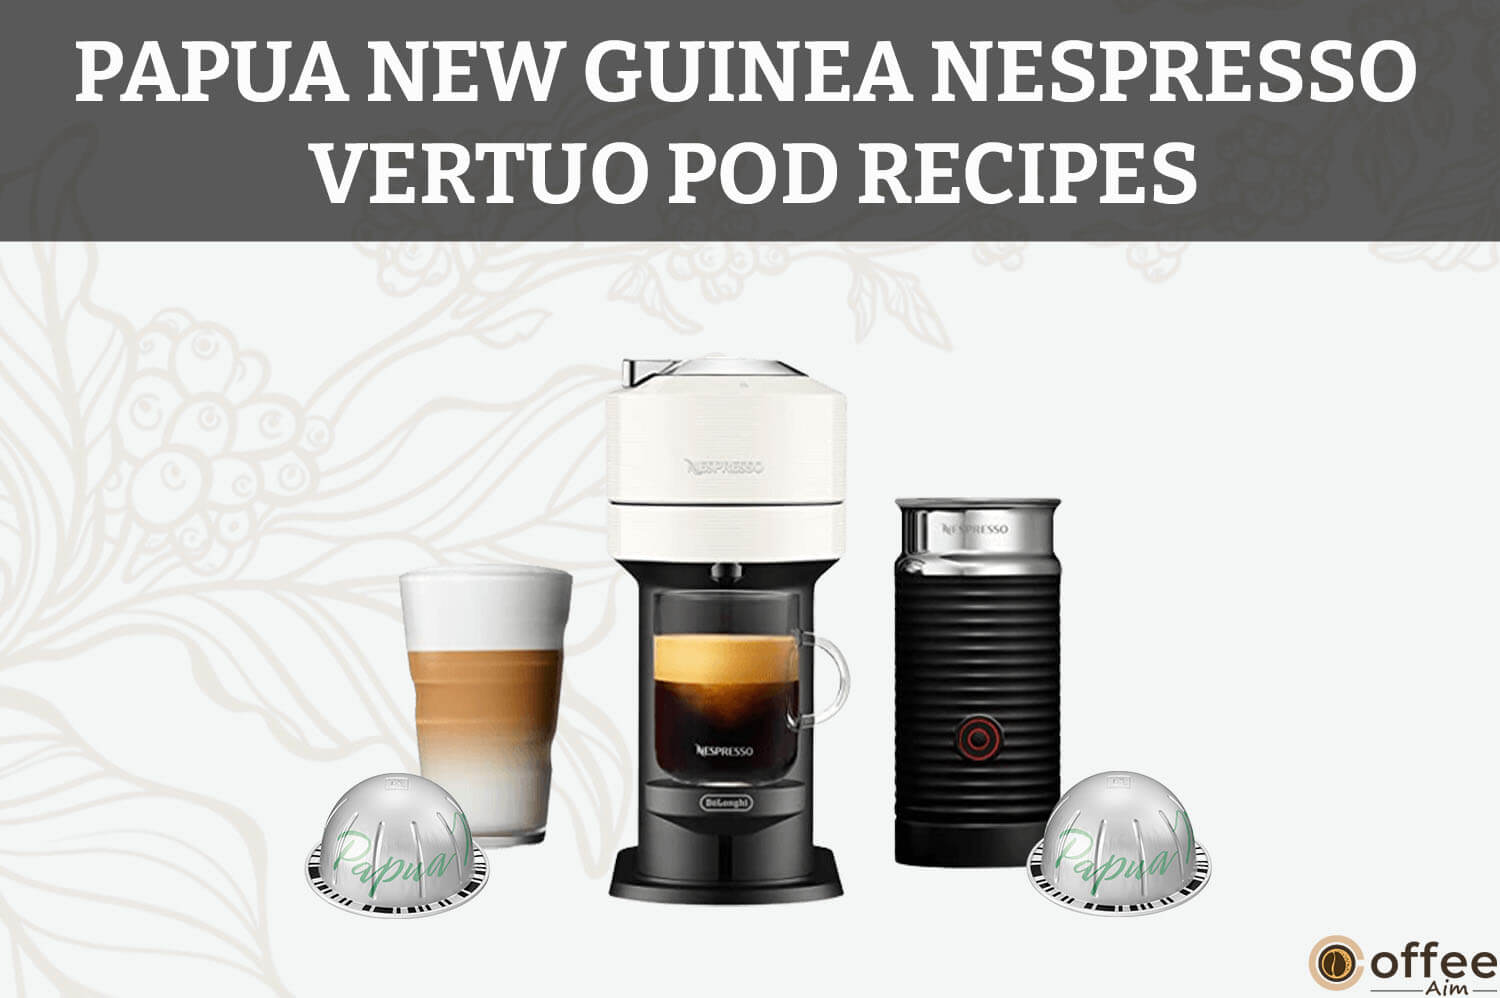 Featured image for the article "Papua New Guinea Nespresso Vertuo Pod Recipes"